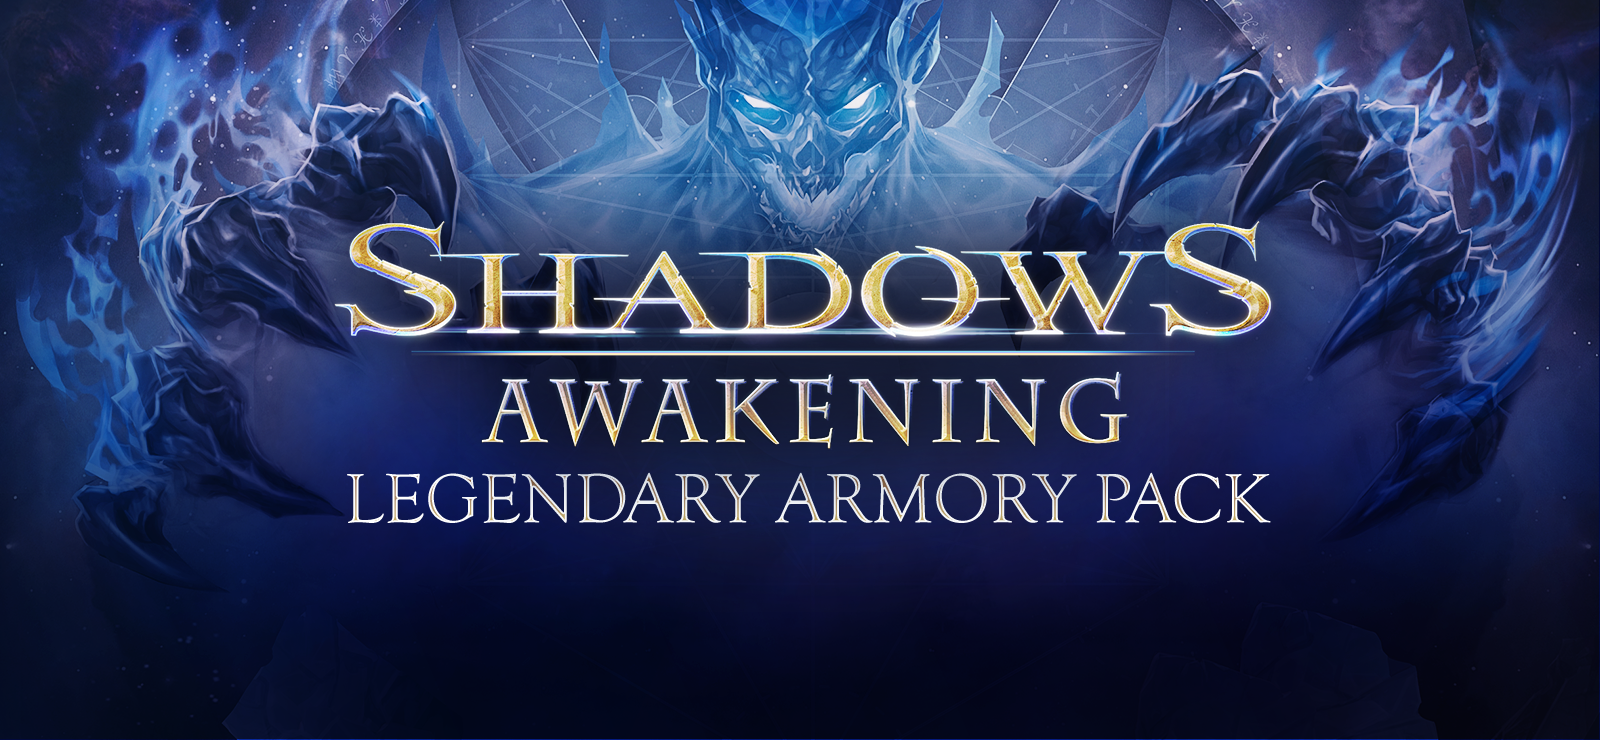 Shadows: Awakening – Legendary Armory Pack